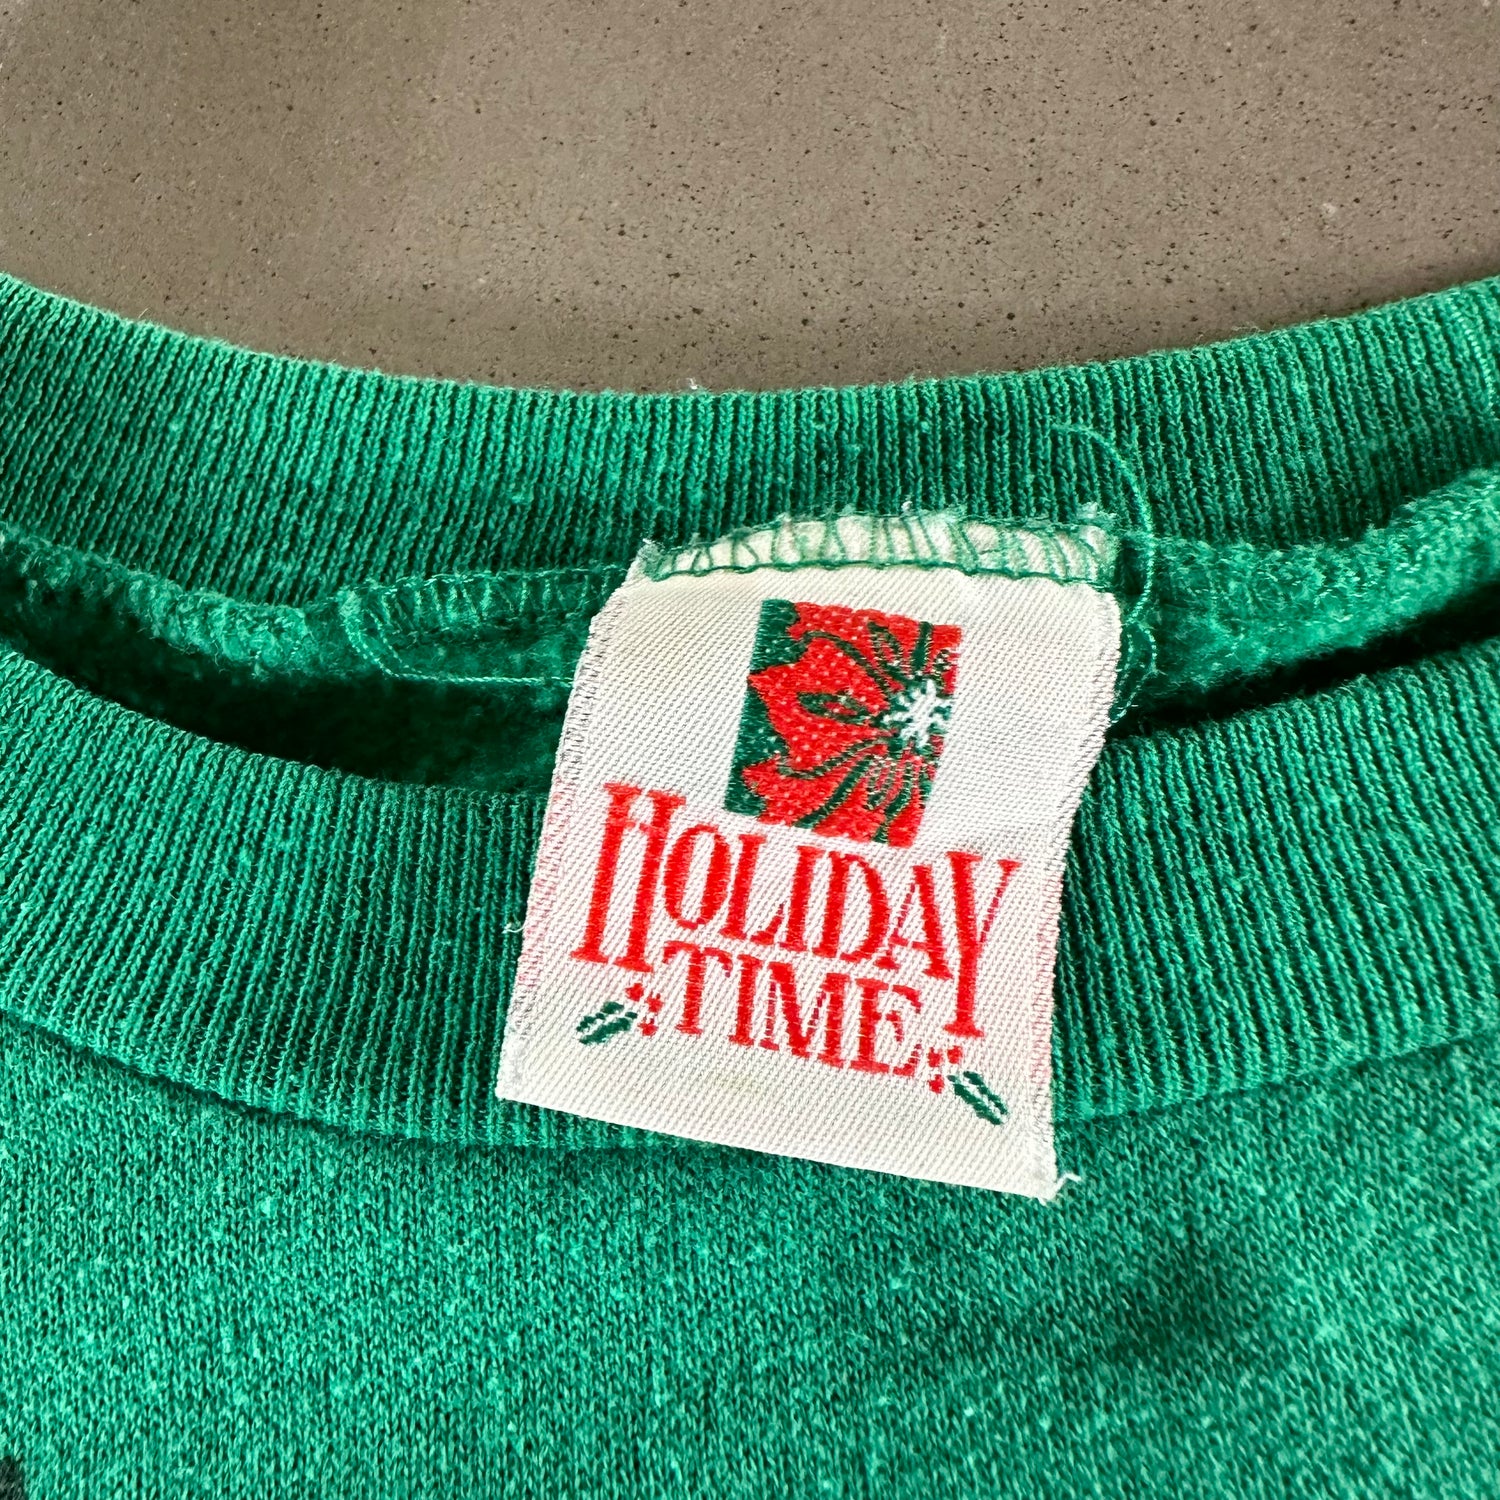 Vintage 1990s I Believe in Santa Sweatshirt size Large